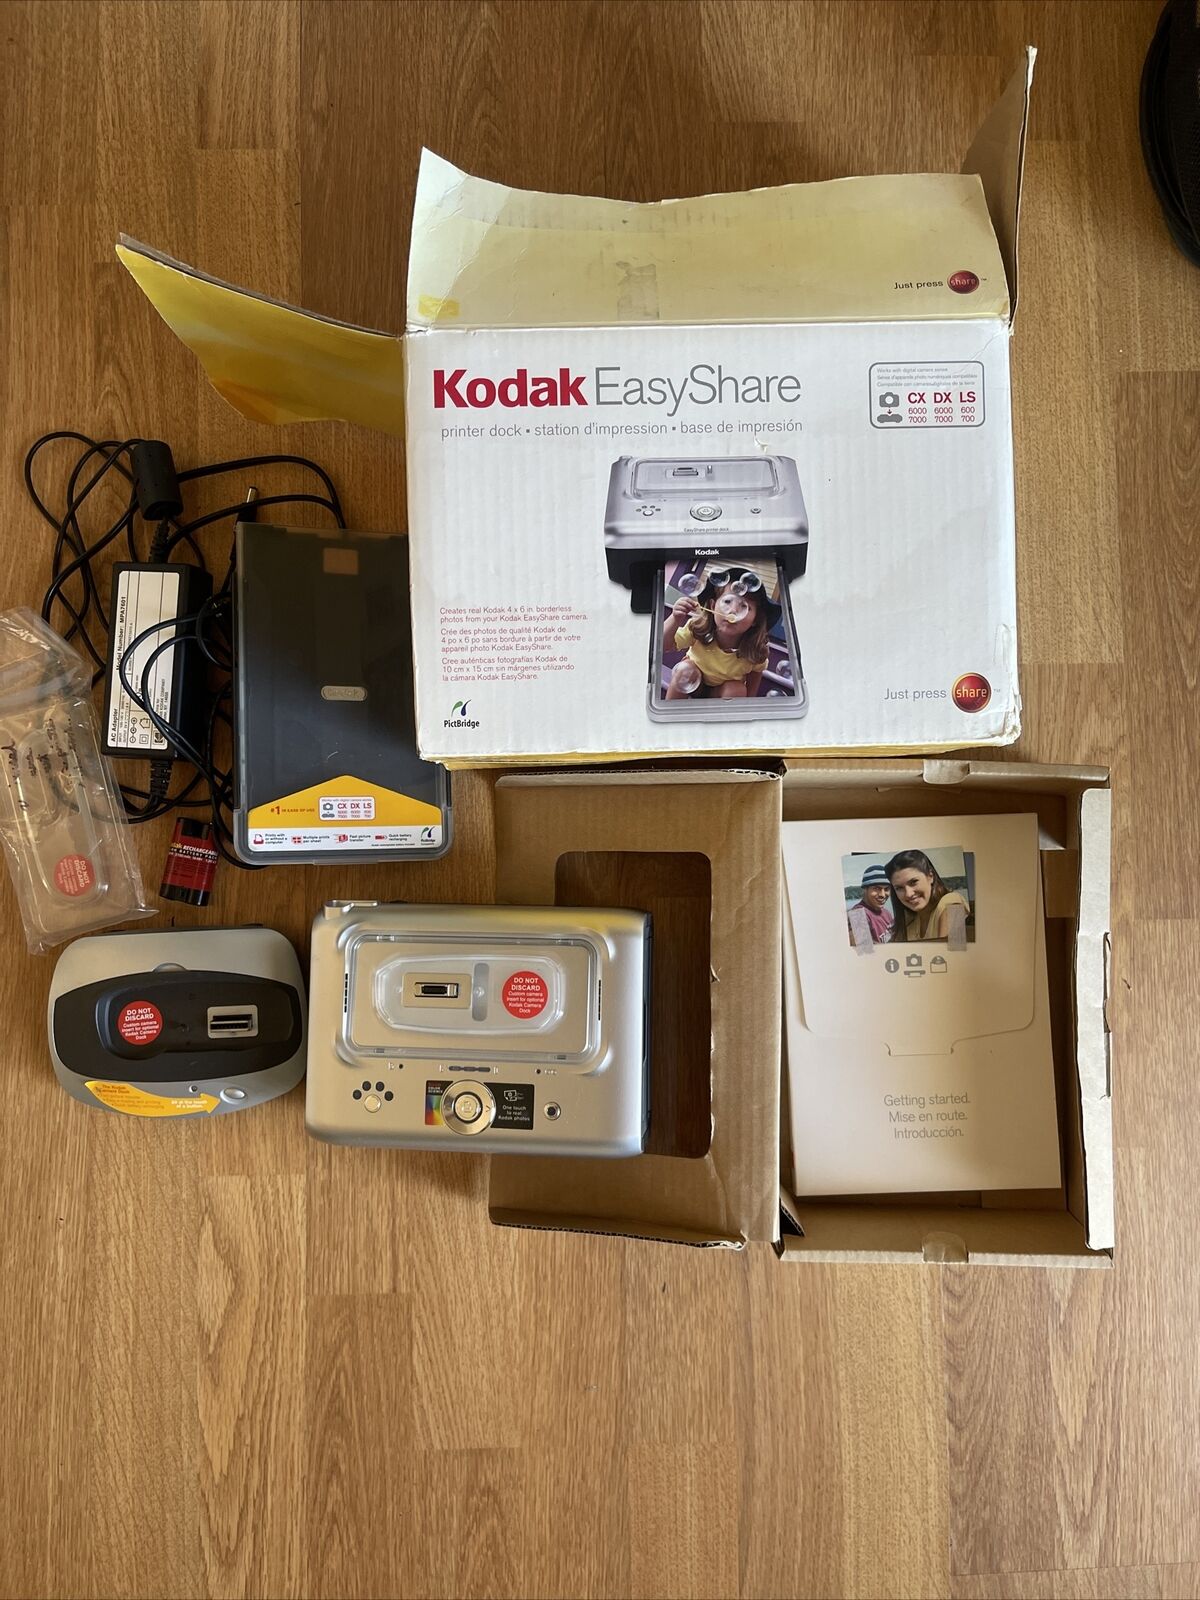 Kodak EasyShare Digital Photo Printer Dock Station With Original Box & Instr.